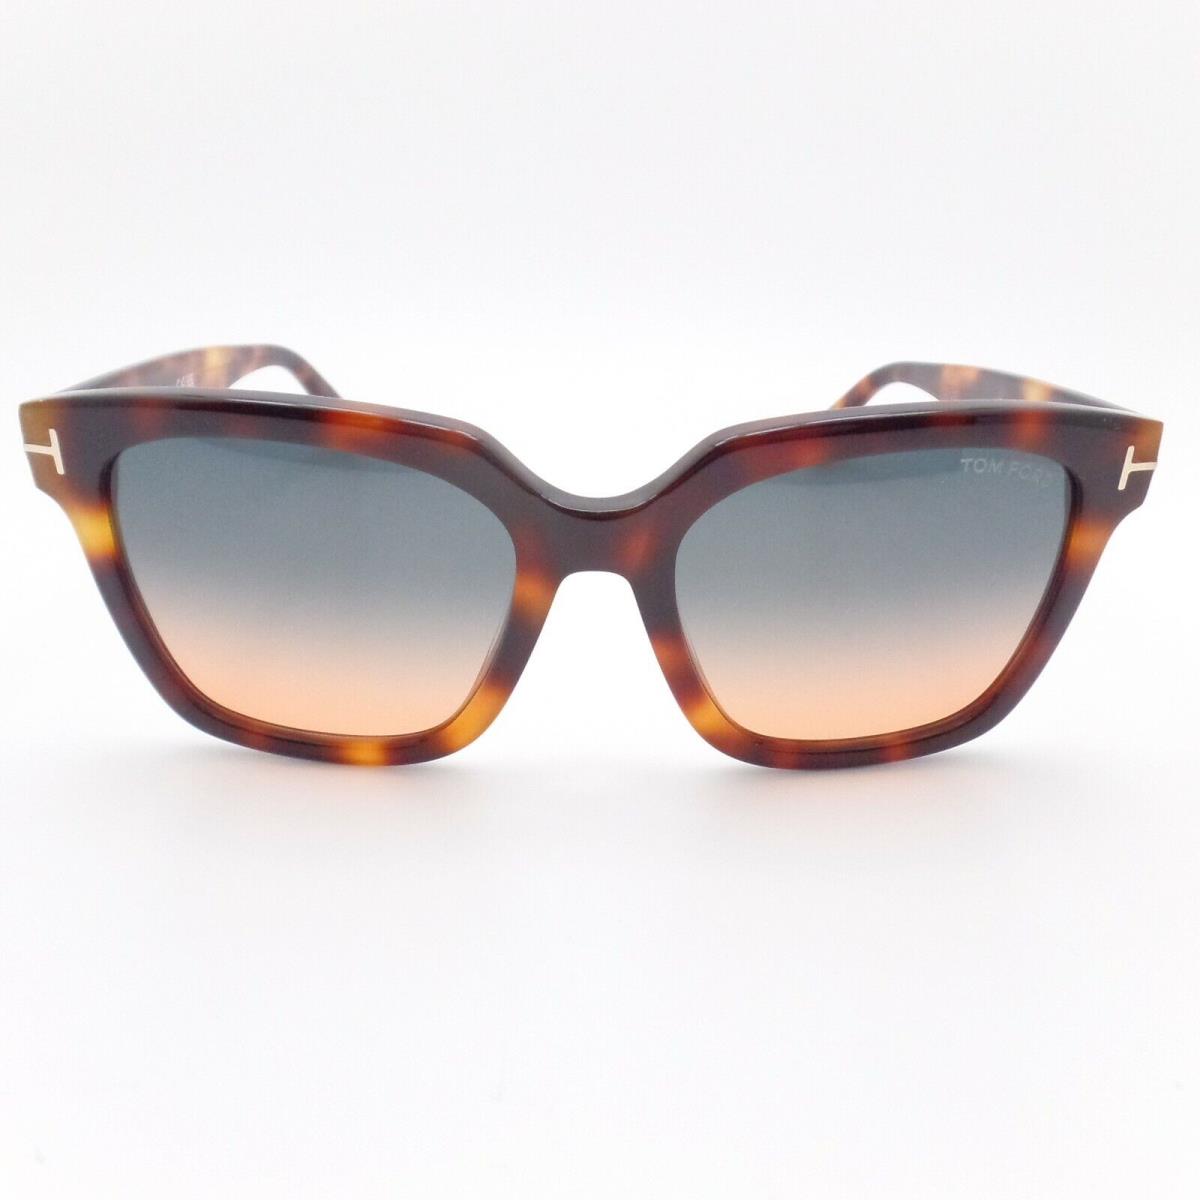 Tom Ford sunglasses Selby - Havana Frame, Blue Teal Peach Fade Lens 0